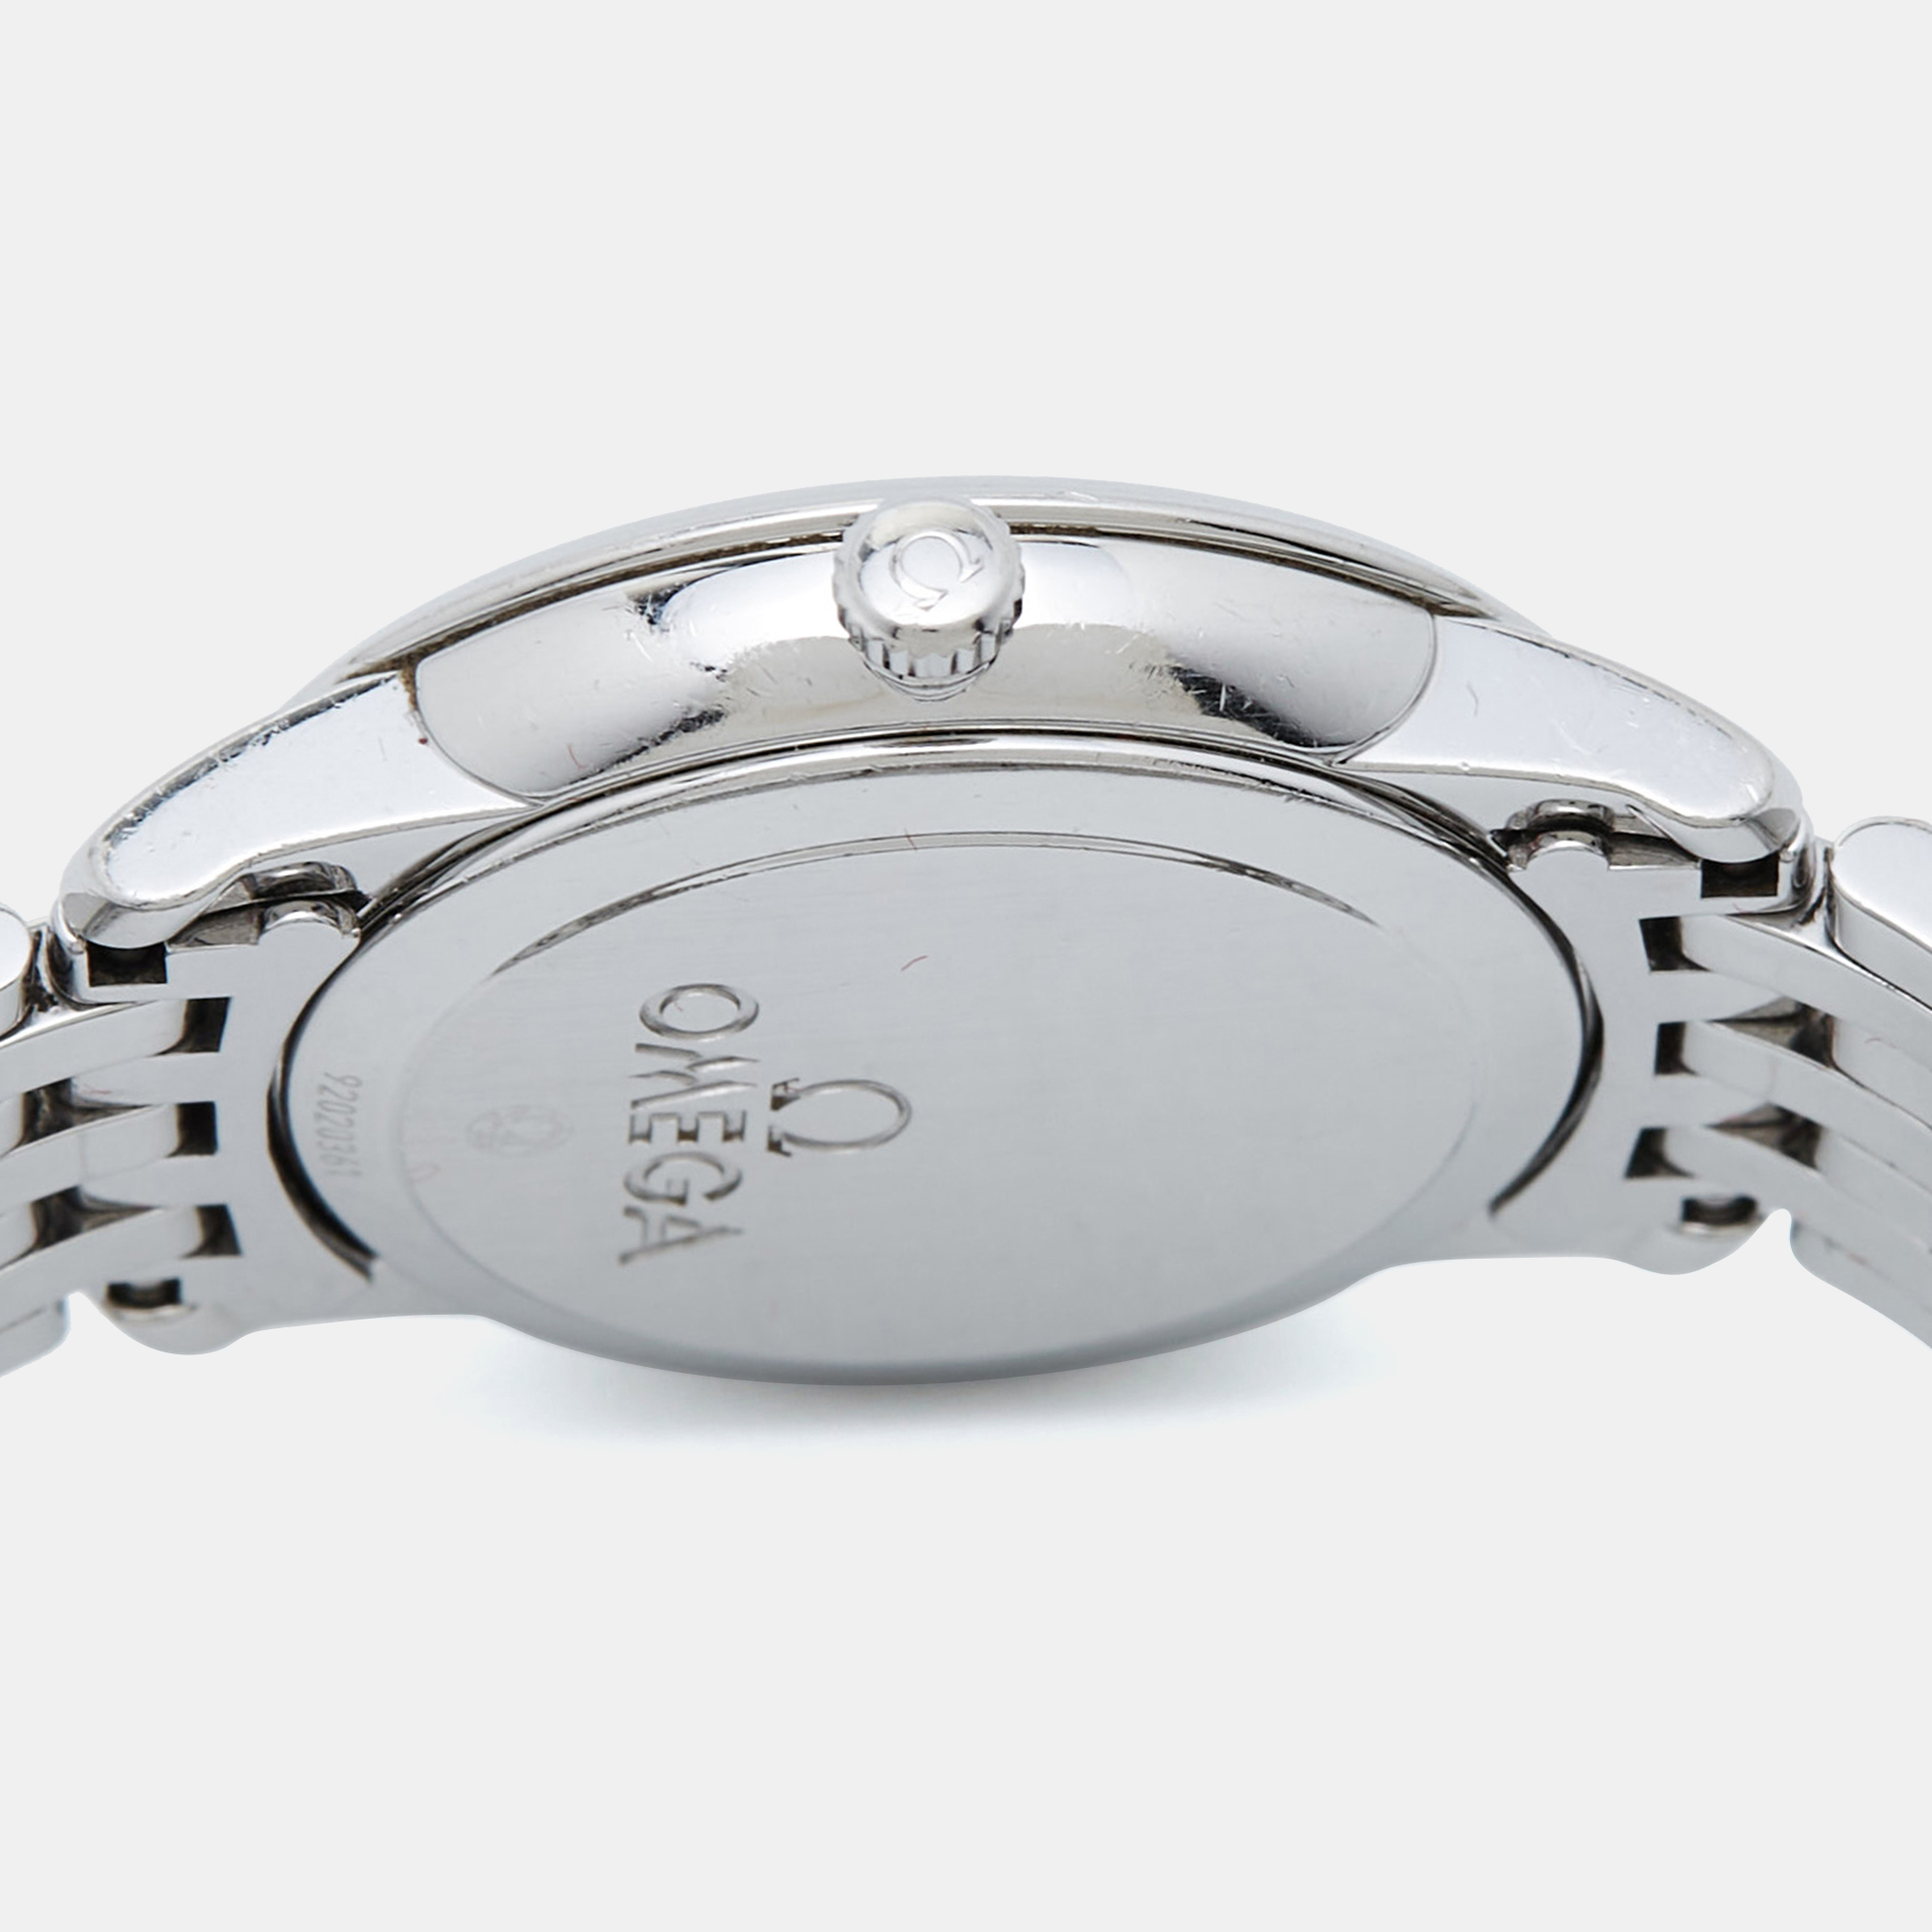 Omega Mother Of Pearl Stainless Steel De Ville Prestige 424.10.27.60.05.001 Automatic Women's Wristwatch 27.4 Mm